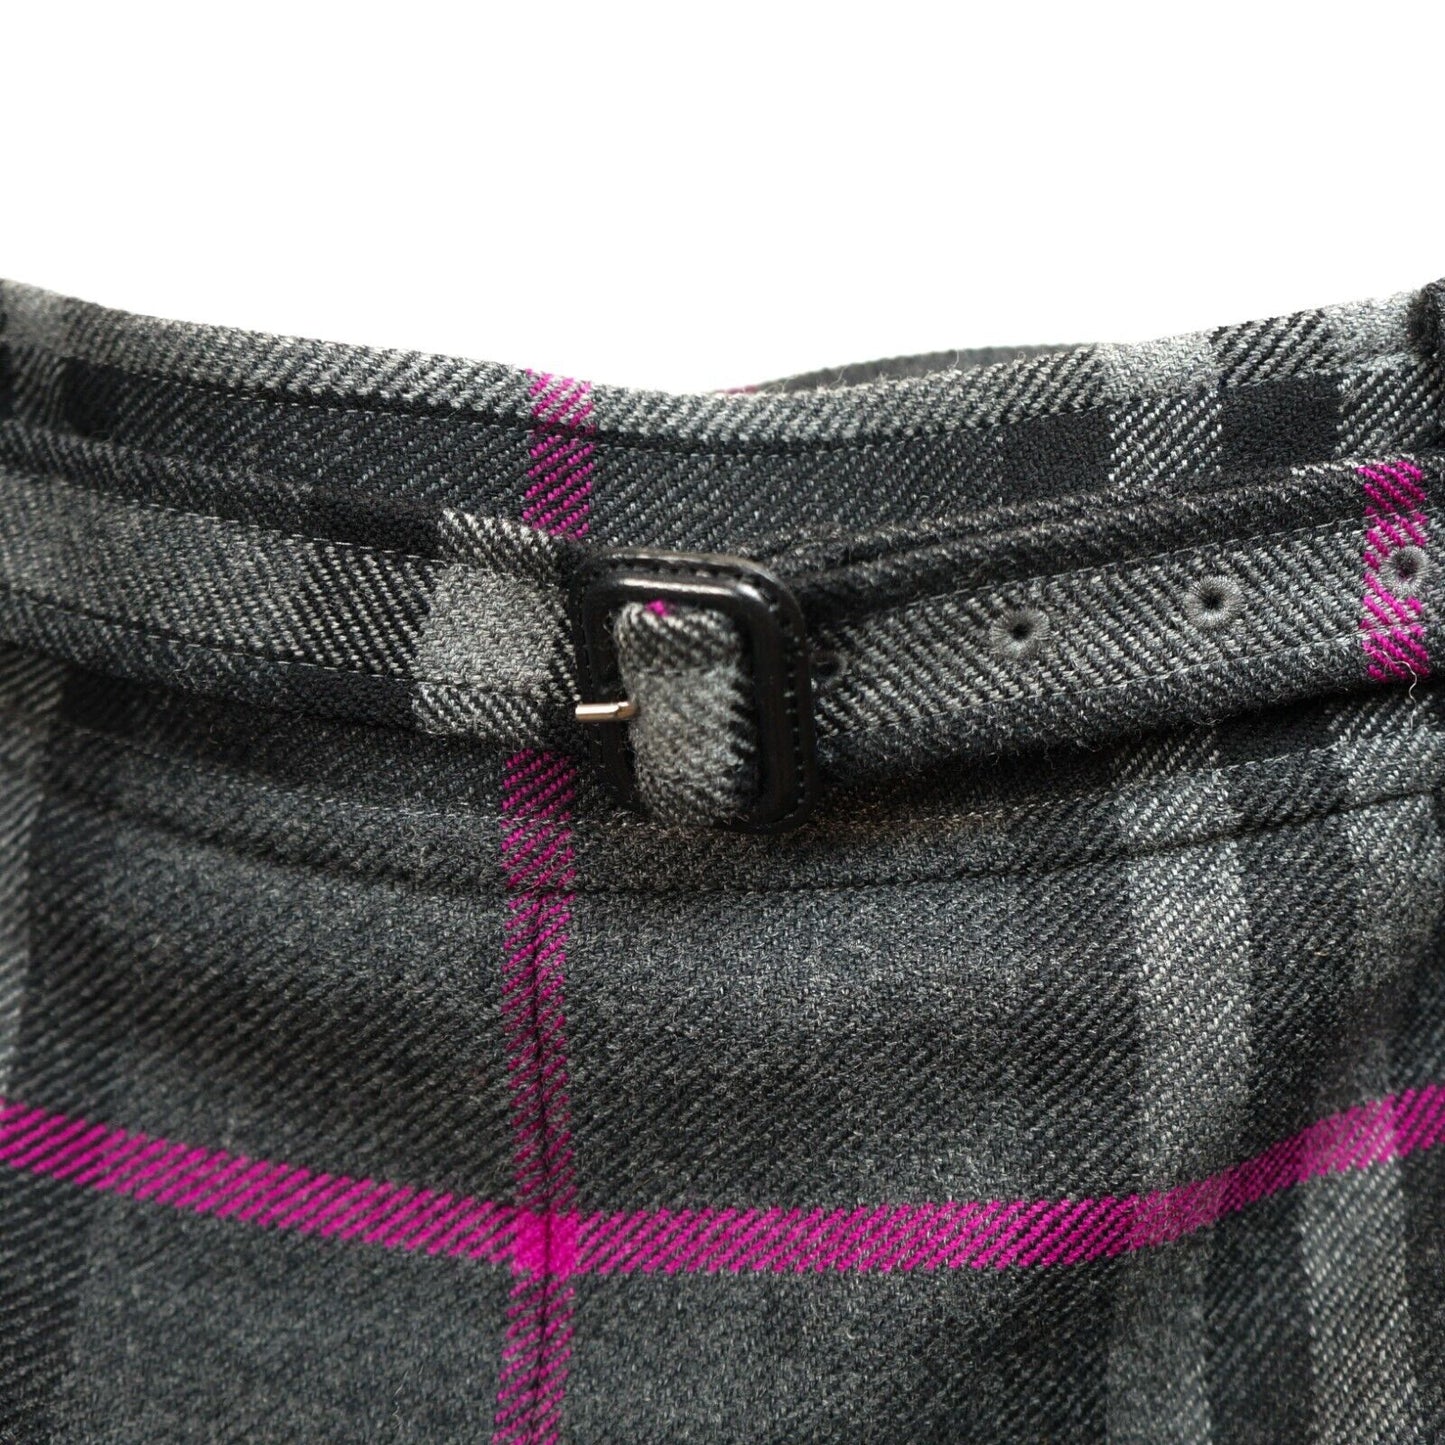 BURBERRY London Pleated Checked Wool Kilt Skirt - Size 40